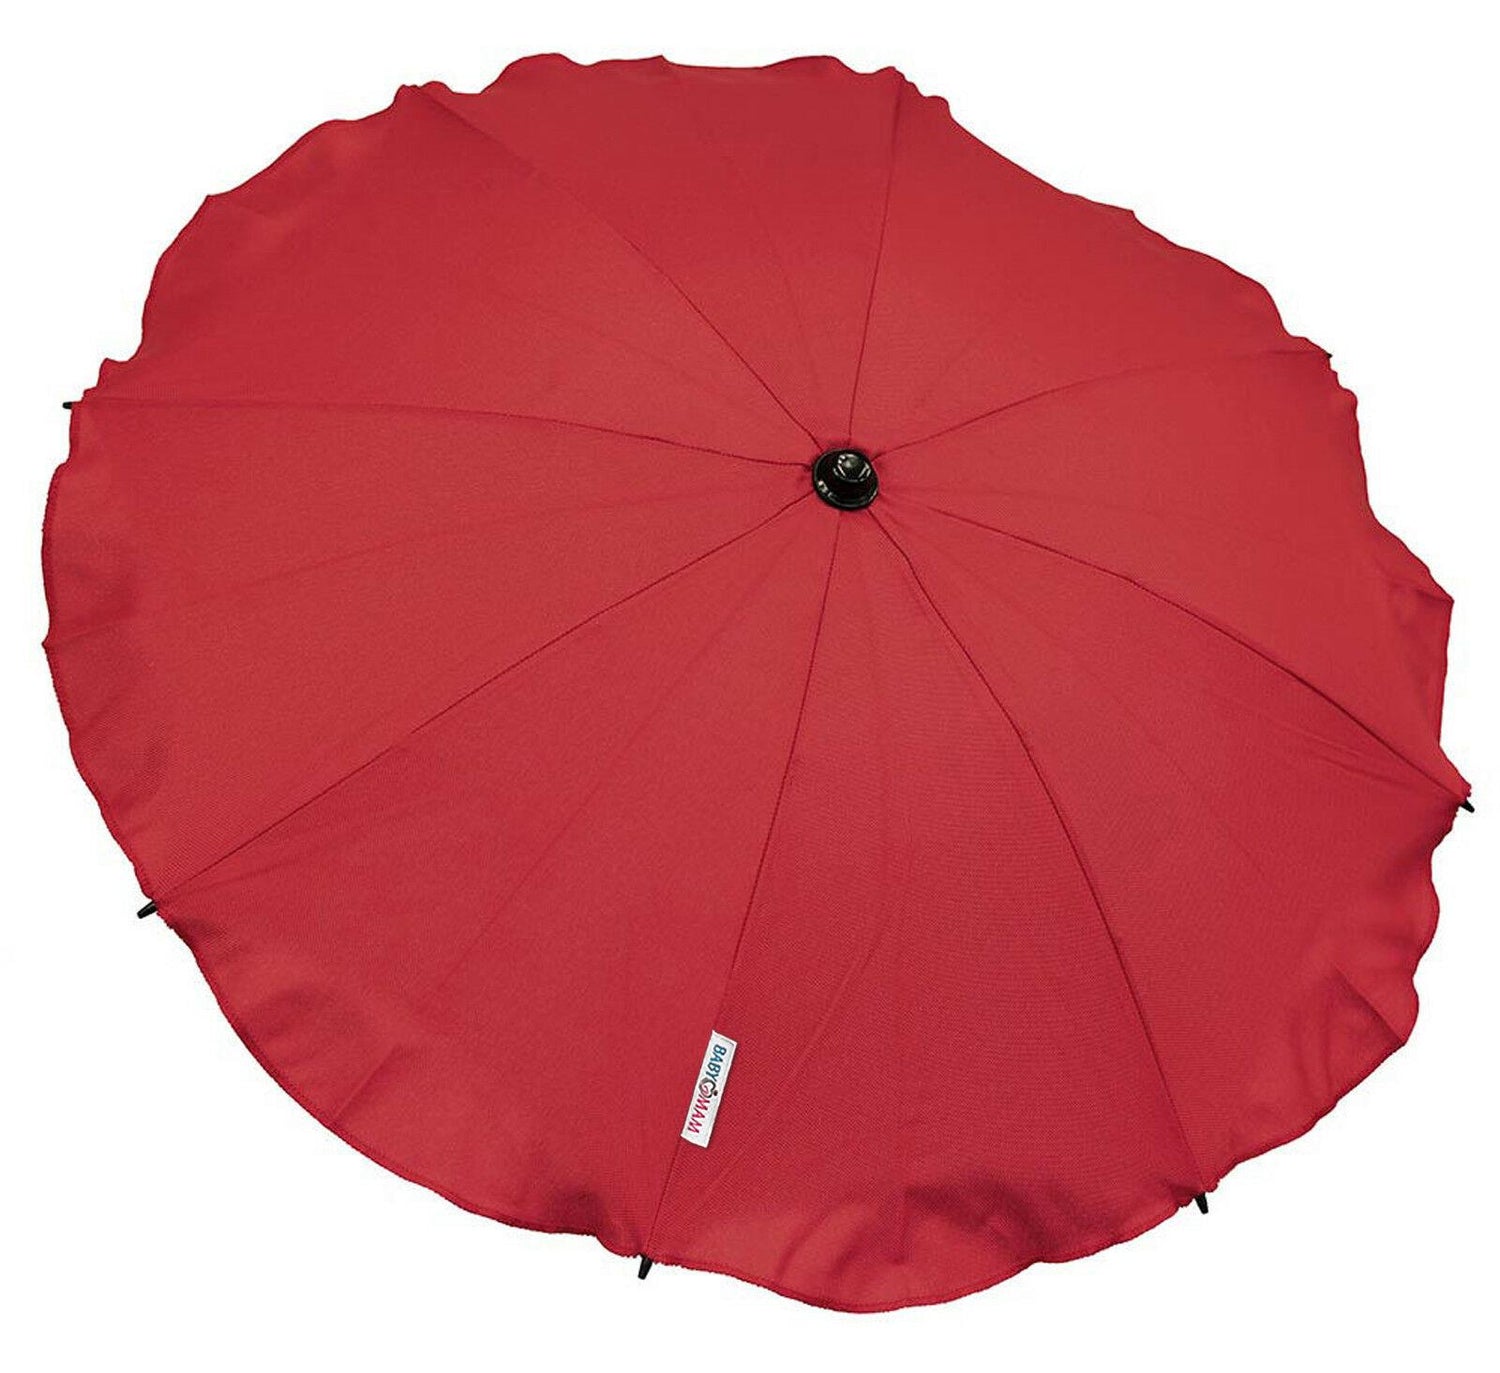 Baby Parasol Universal Sun Umbrella Pram Stroller Canopy Protect From Sun Rain Dark Red